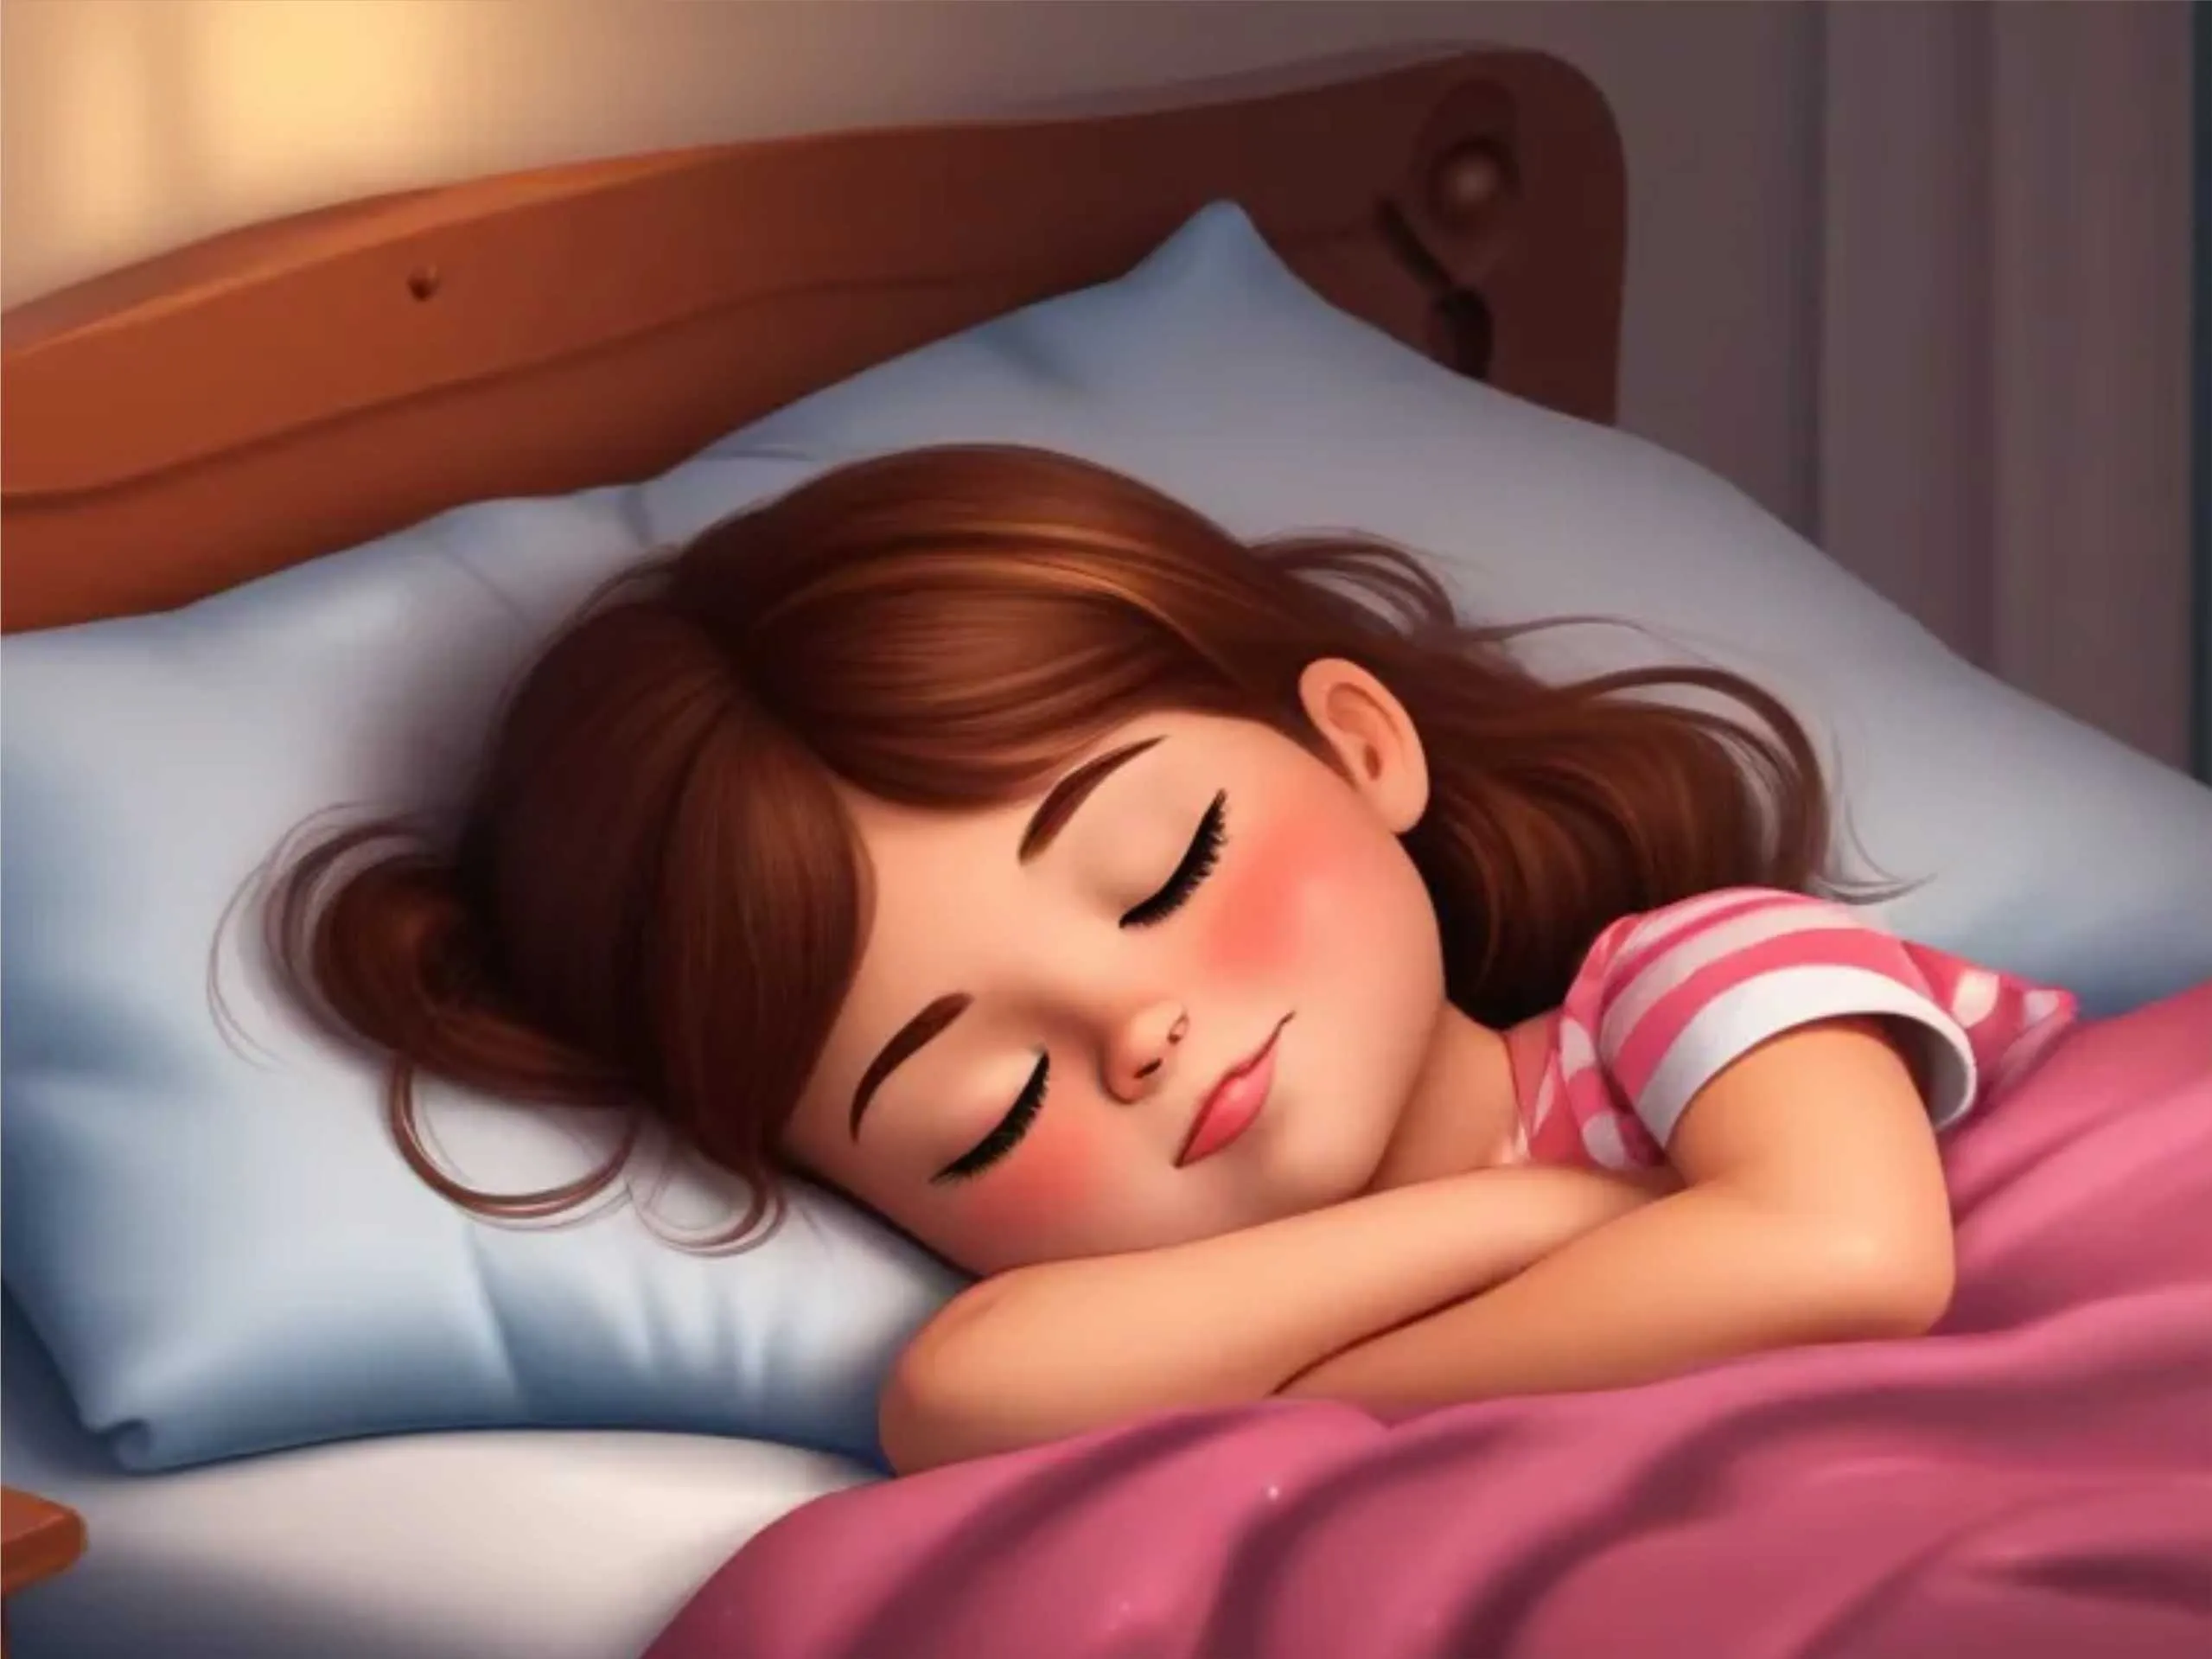 Little girl lying on bed realistic cartoon image